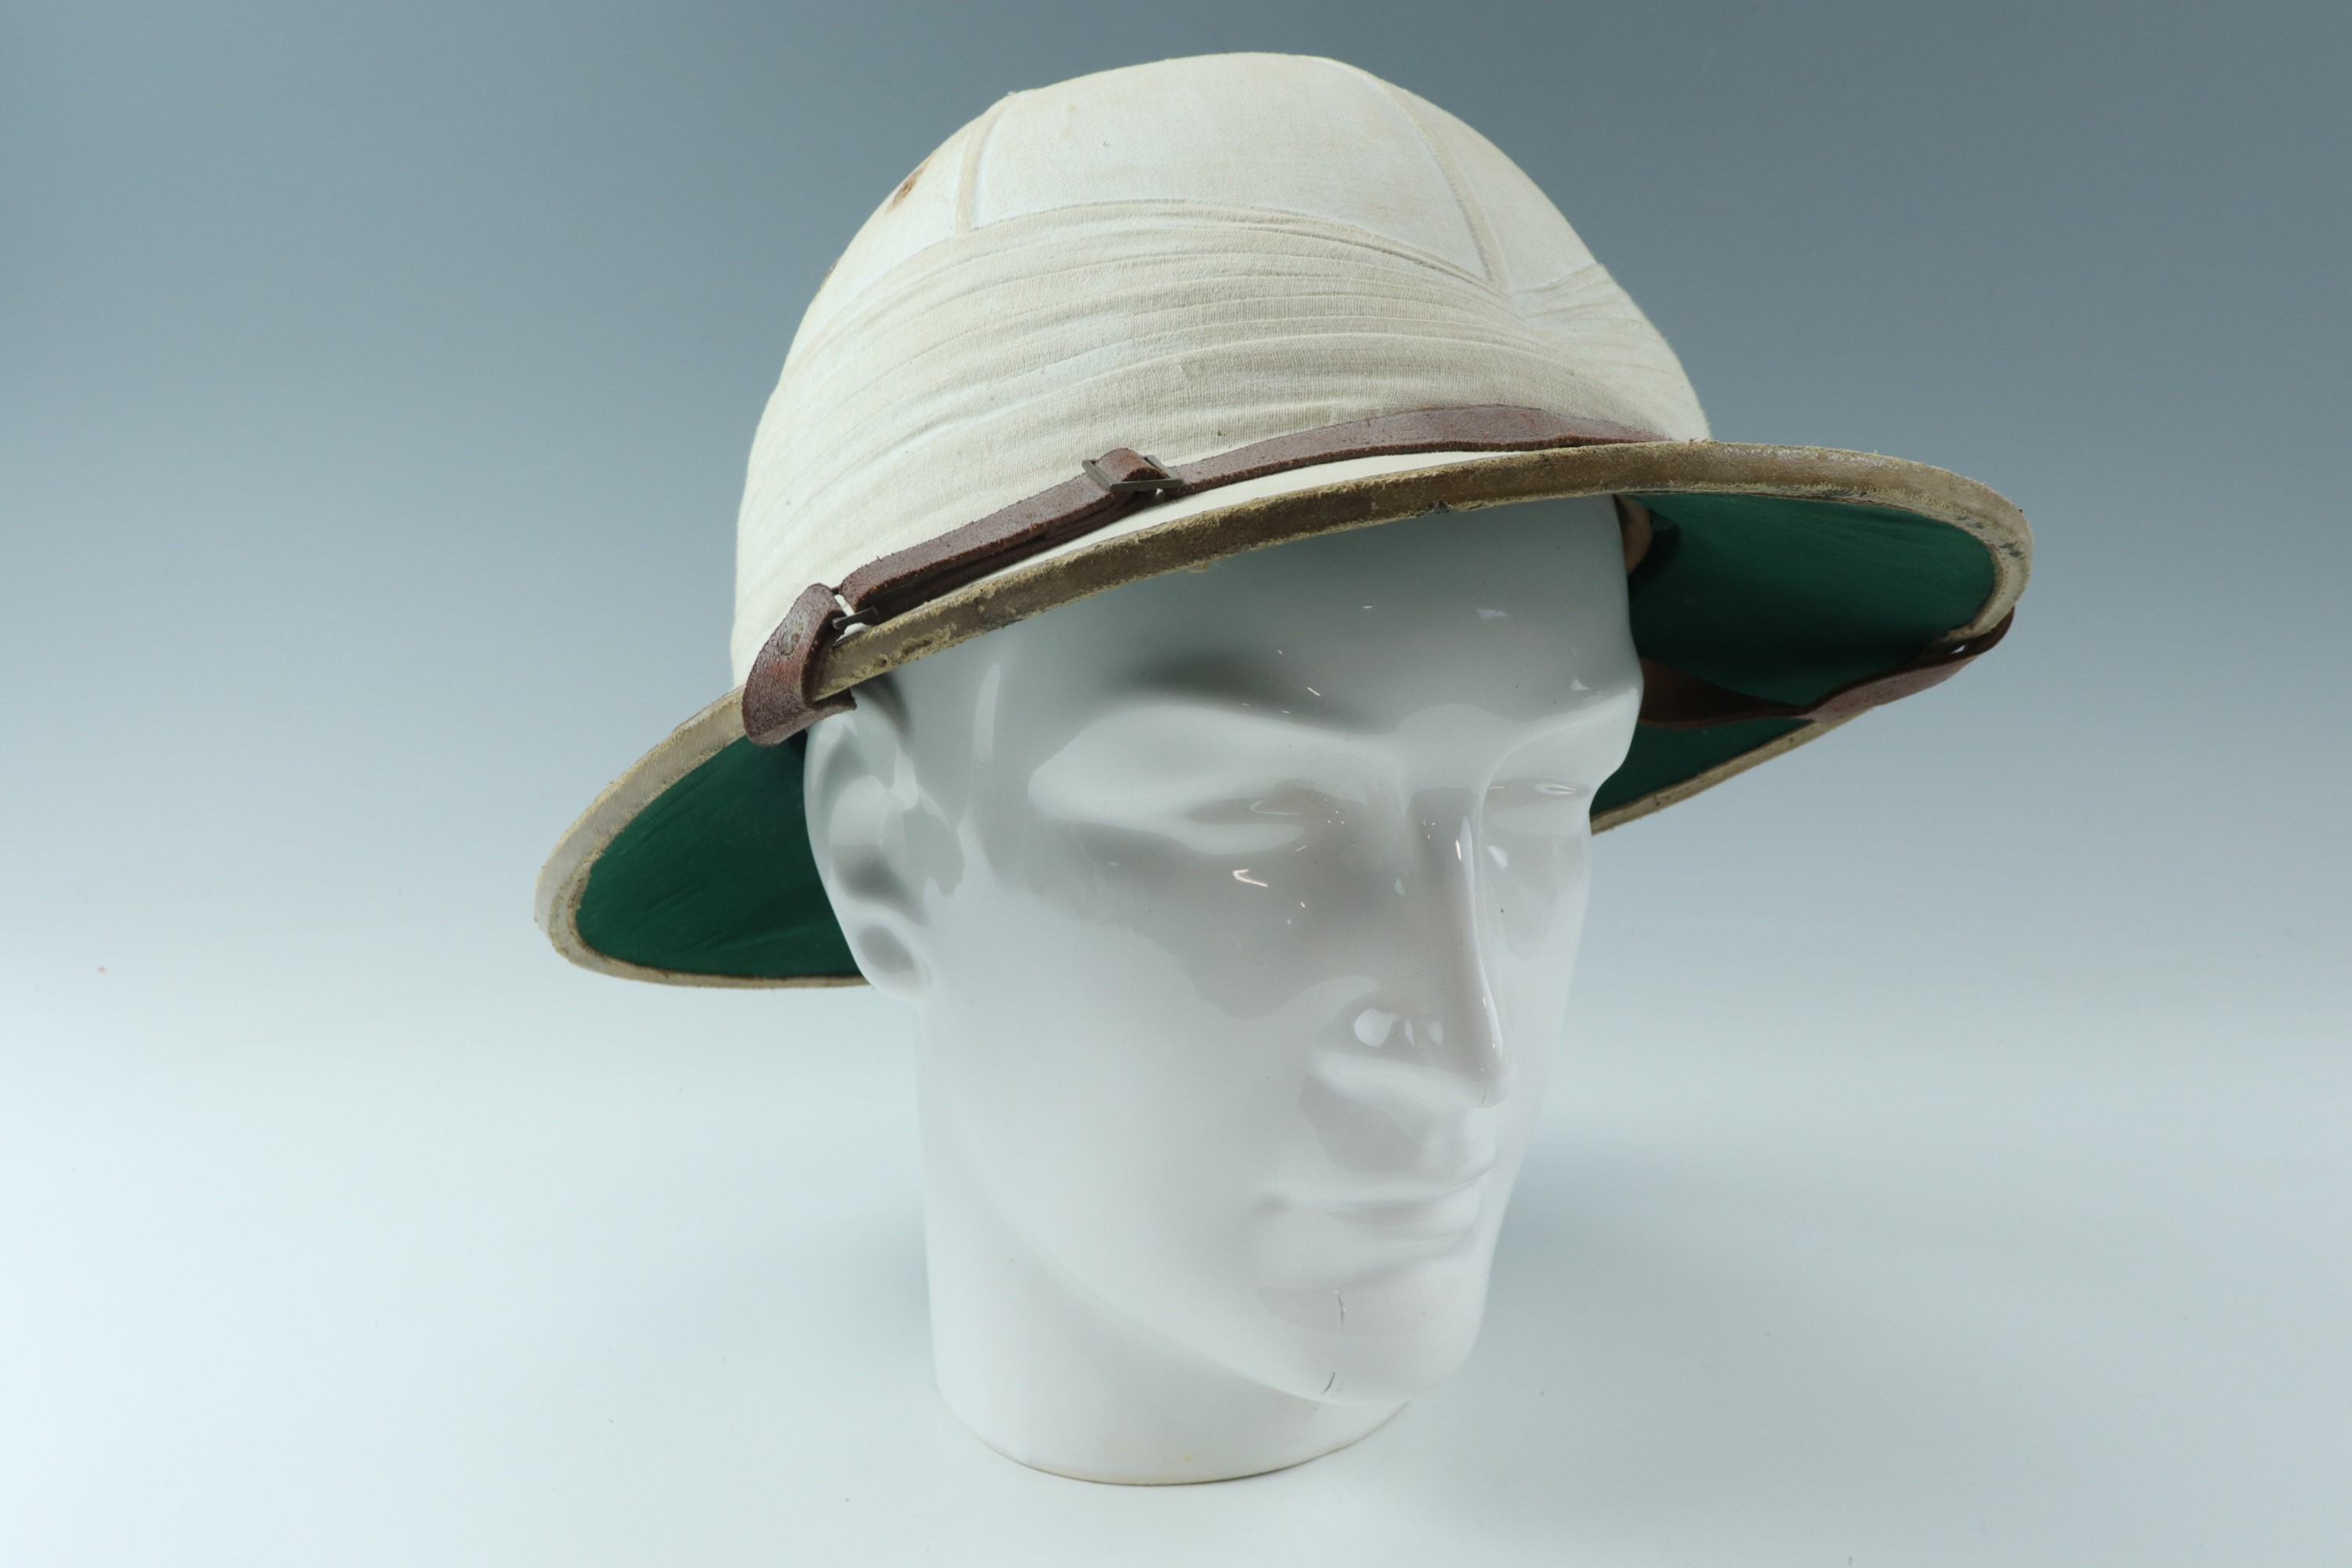 An Ellwood tropical cork helmet by "The Simon Arzi Stores", Post Said